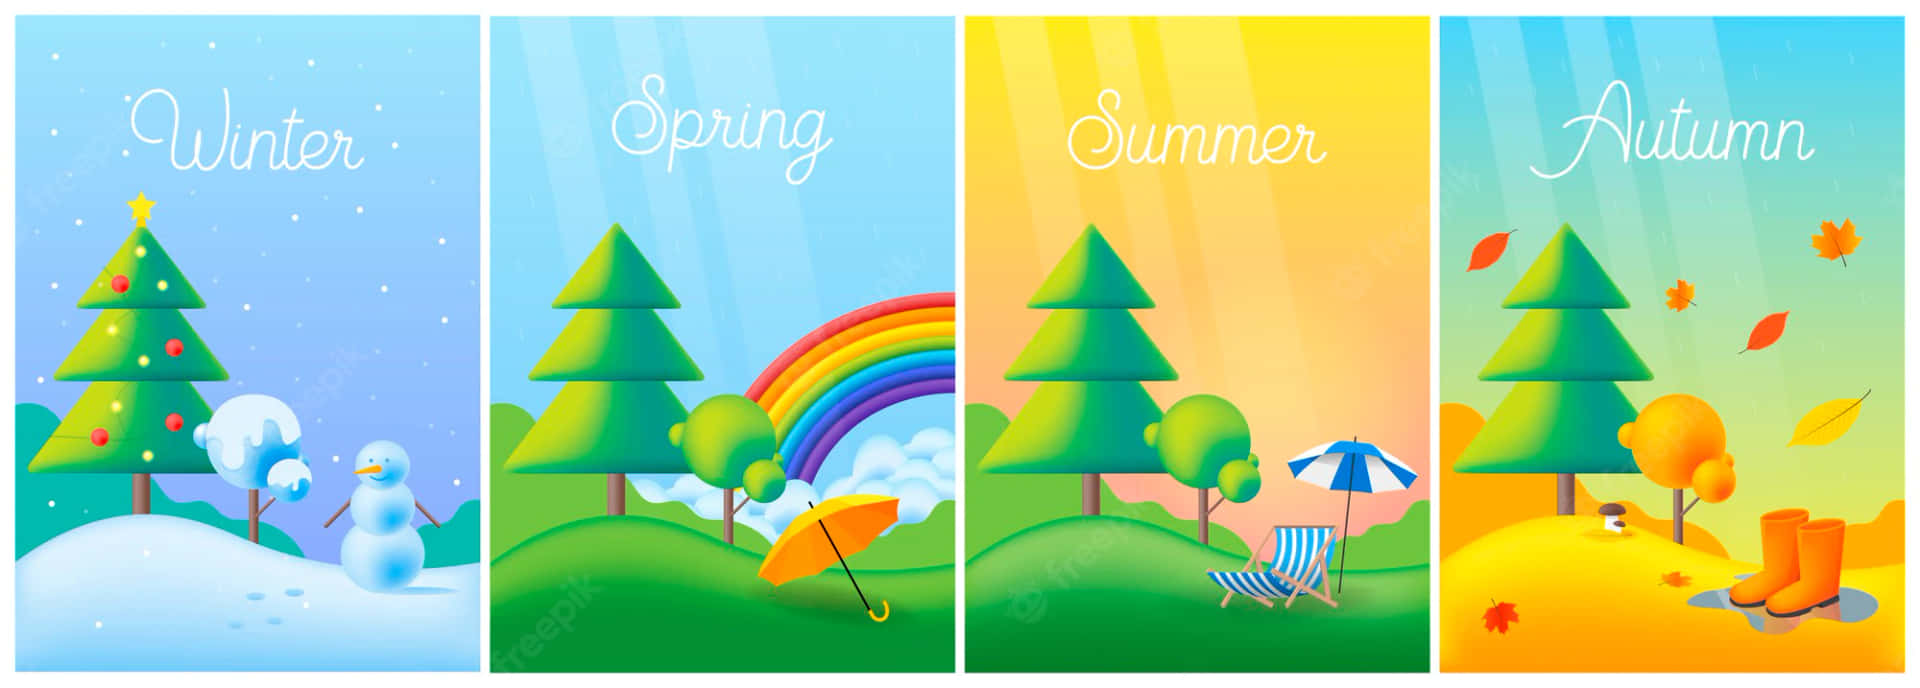 Interactive Collage Seasons Wallpaper